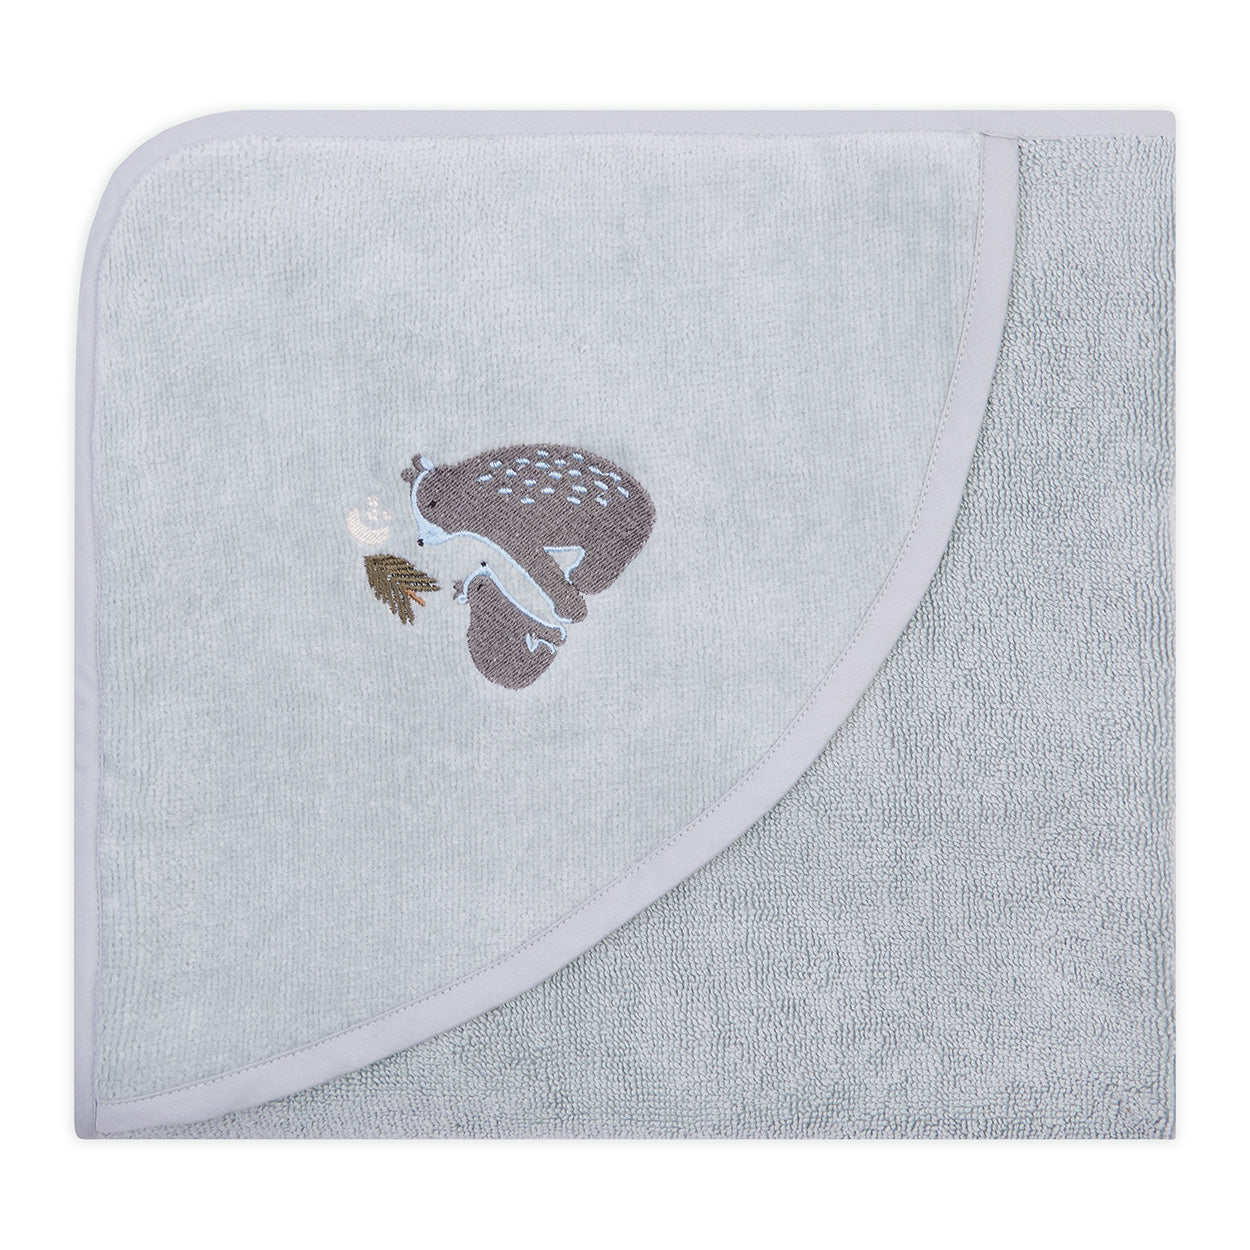 Avery Row Hooded Towel - Bear (2 Sizes Available)